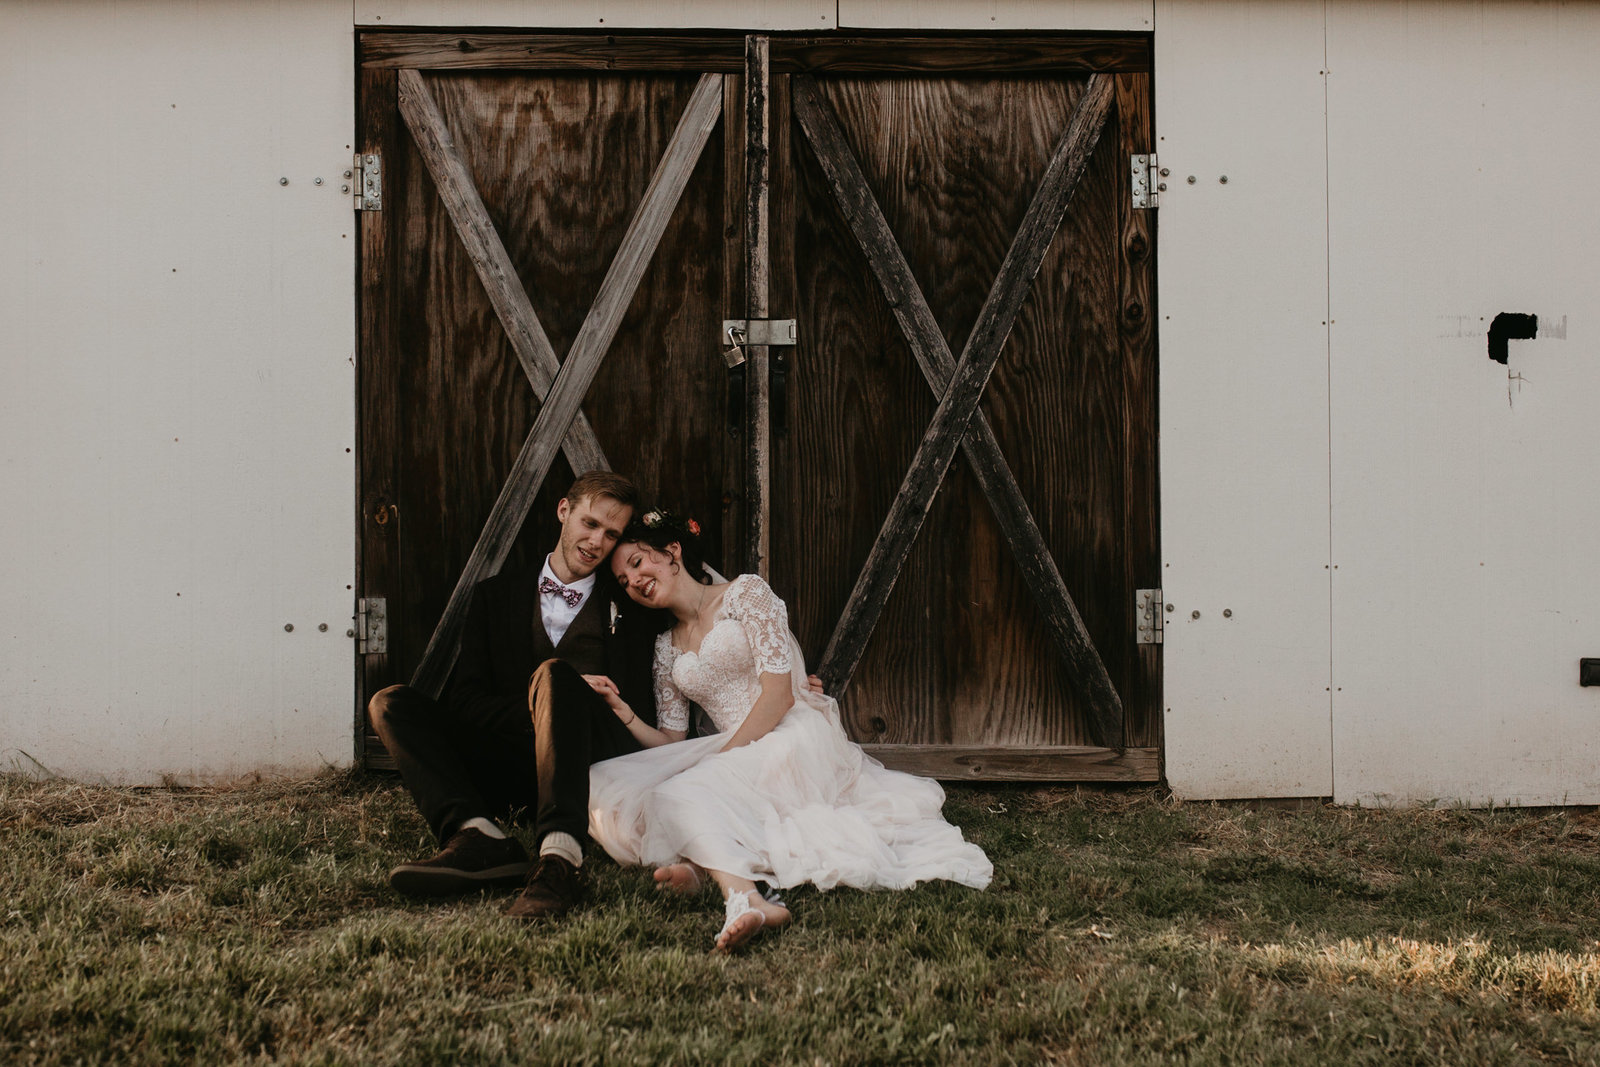 Fun and Romantic DIY bohemian backyard wedding in arlington texas